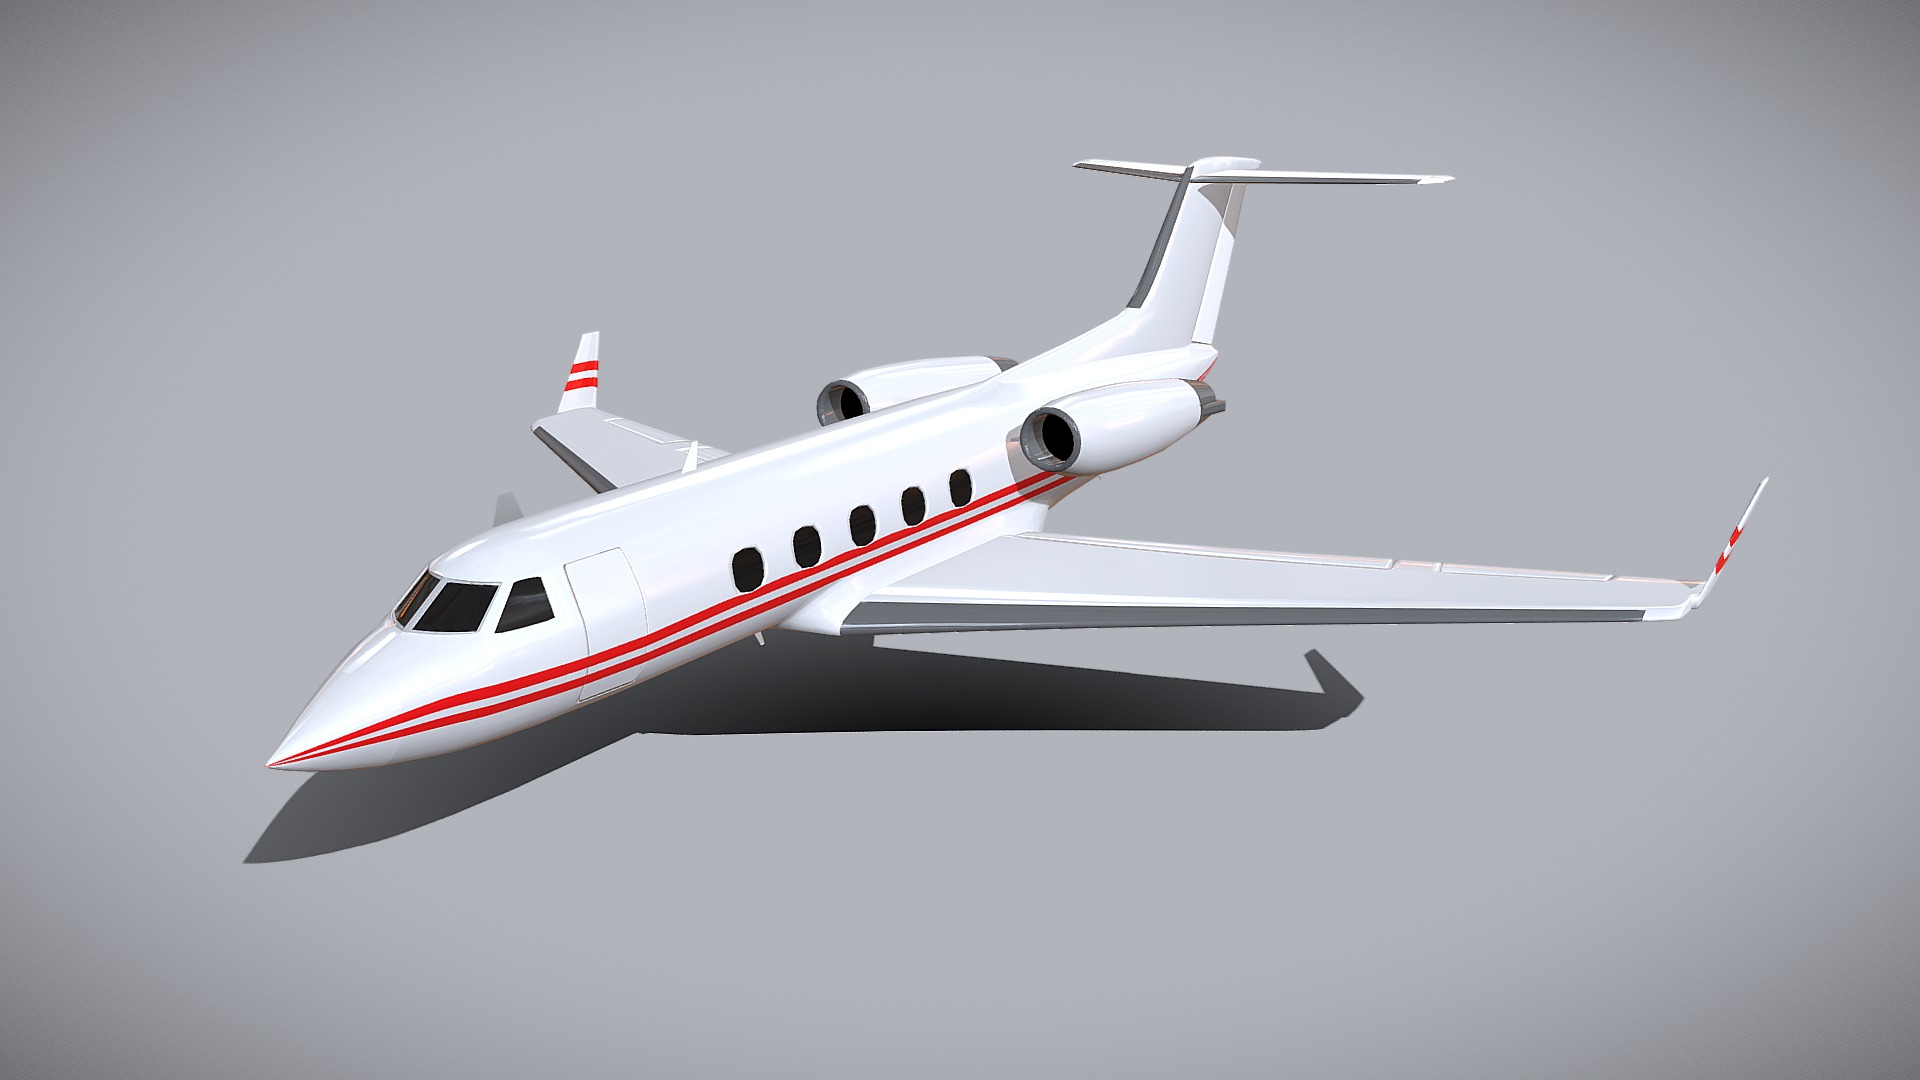 3D model Gulfstream Aerospace G-1159A business jet - This is a 3D model of the Gulfstream Aerospace G-1159A business jet. The 3D model is about a white and red airplane.